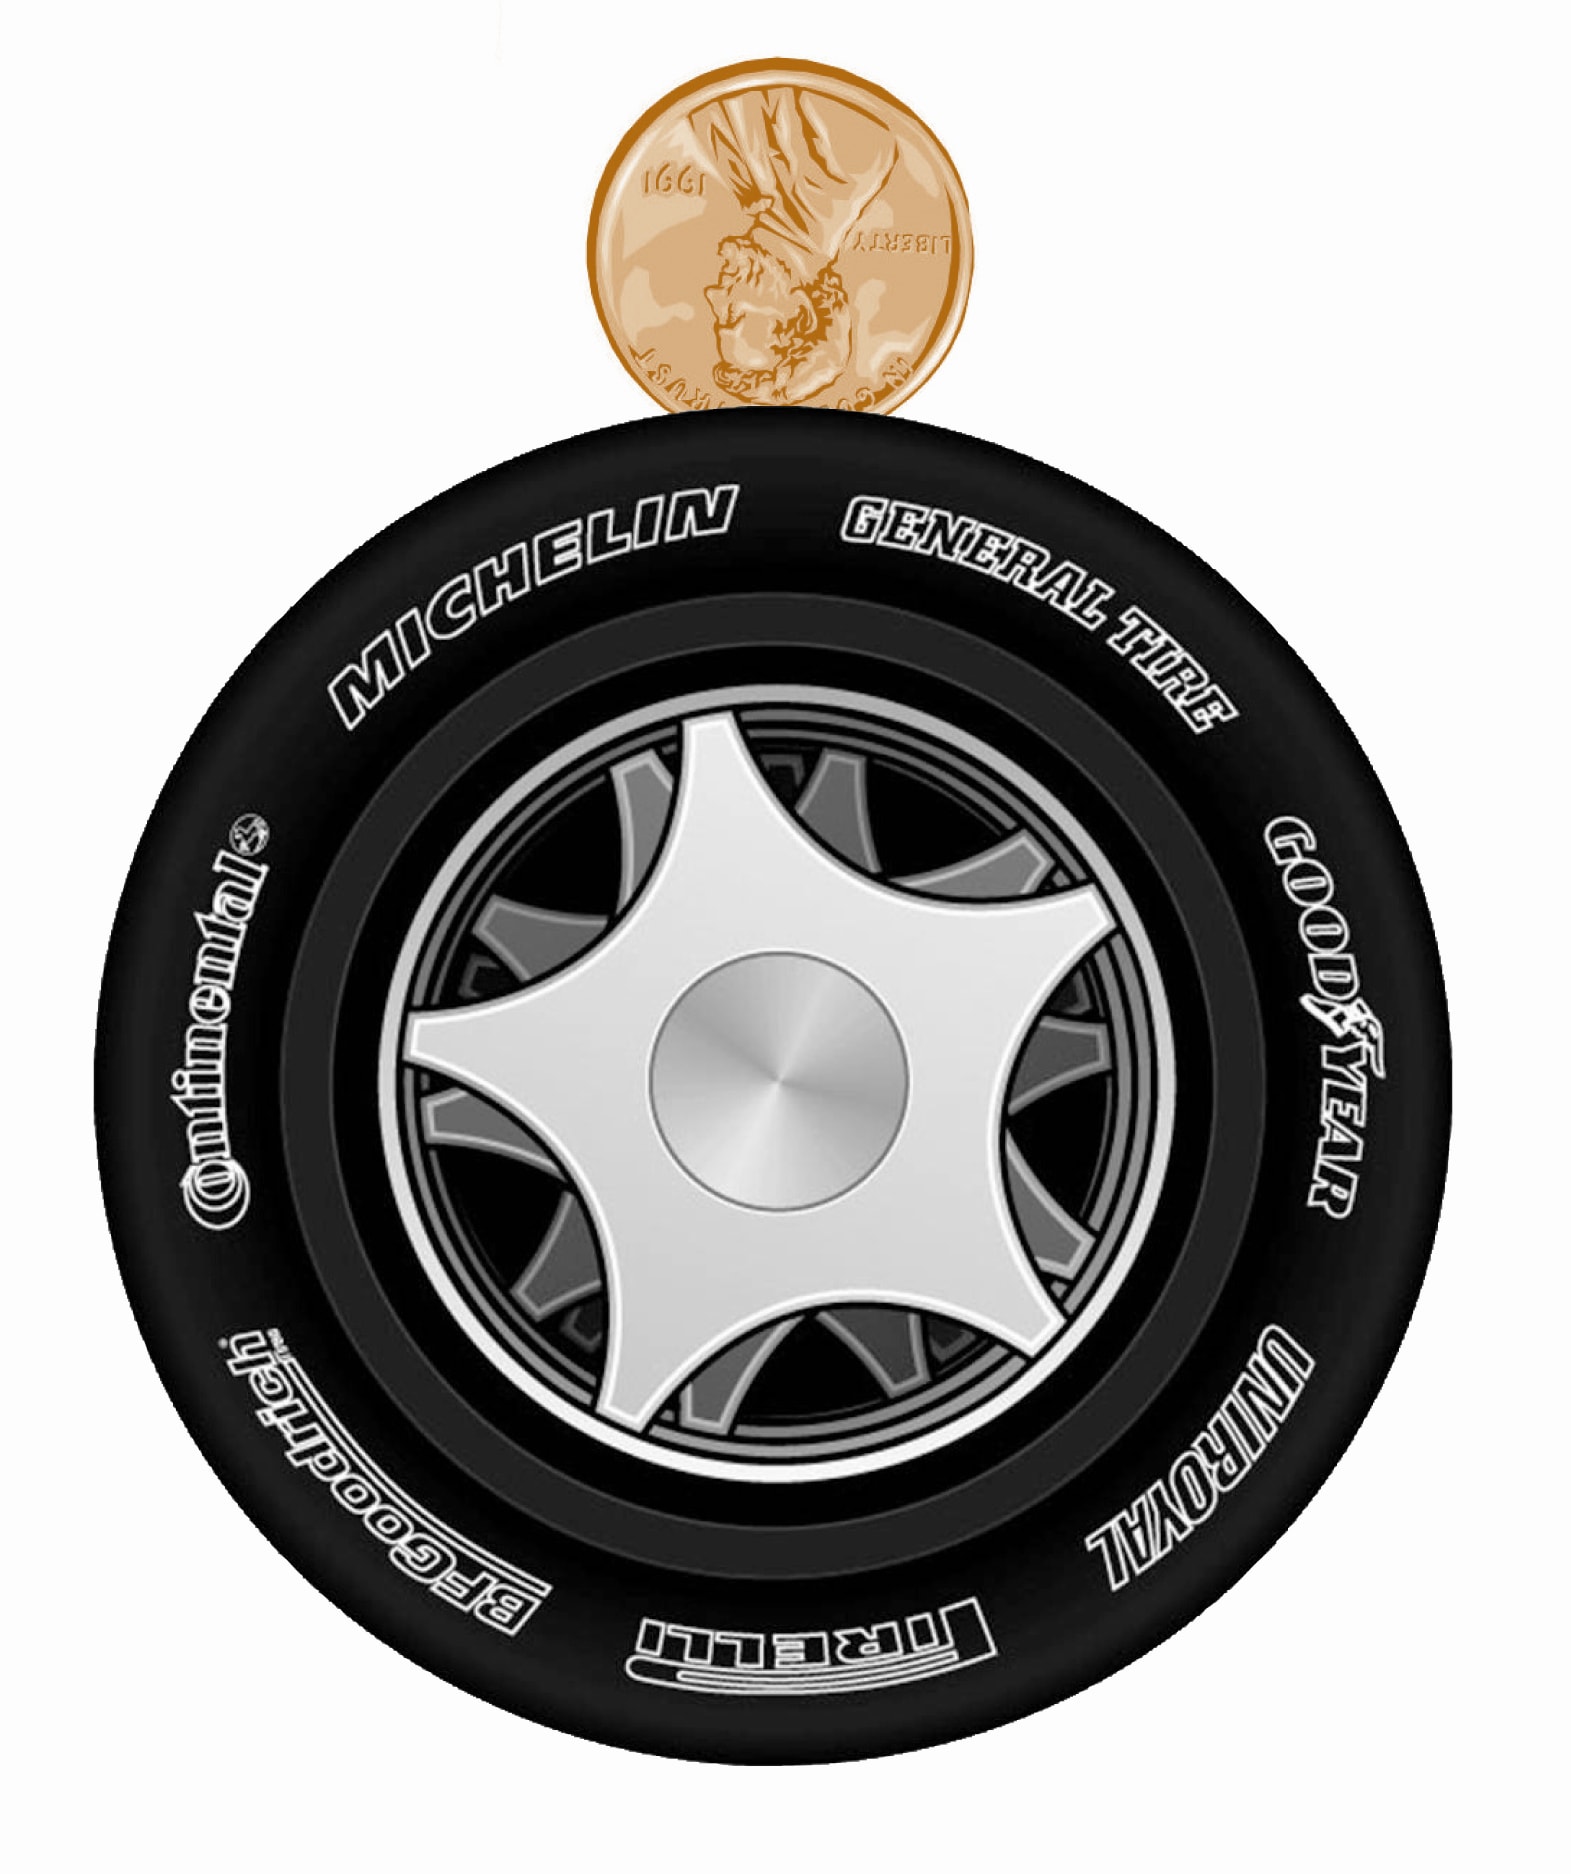 Ford goodyear tire rebate #1